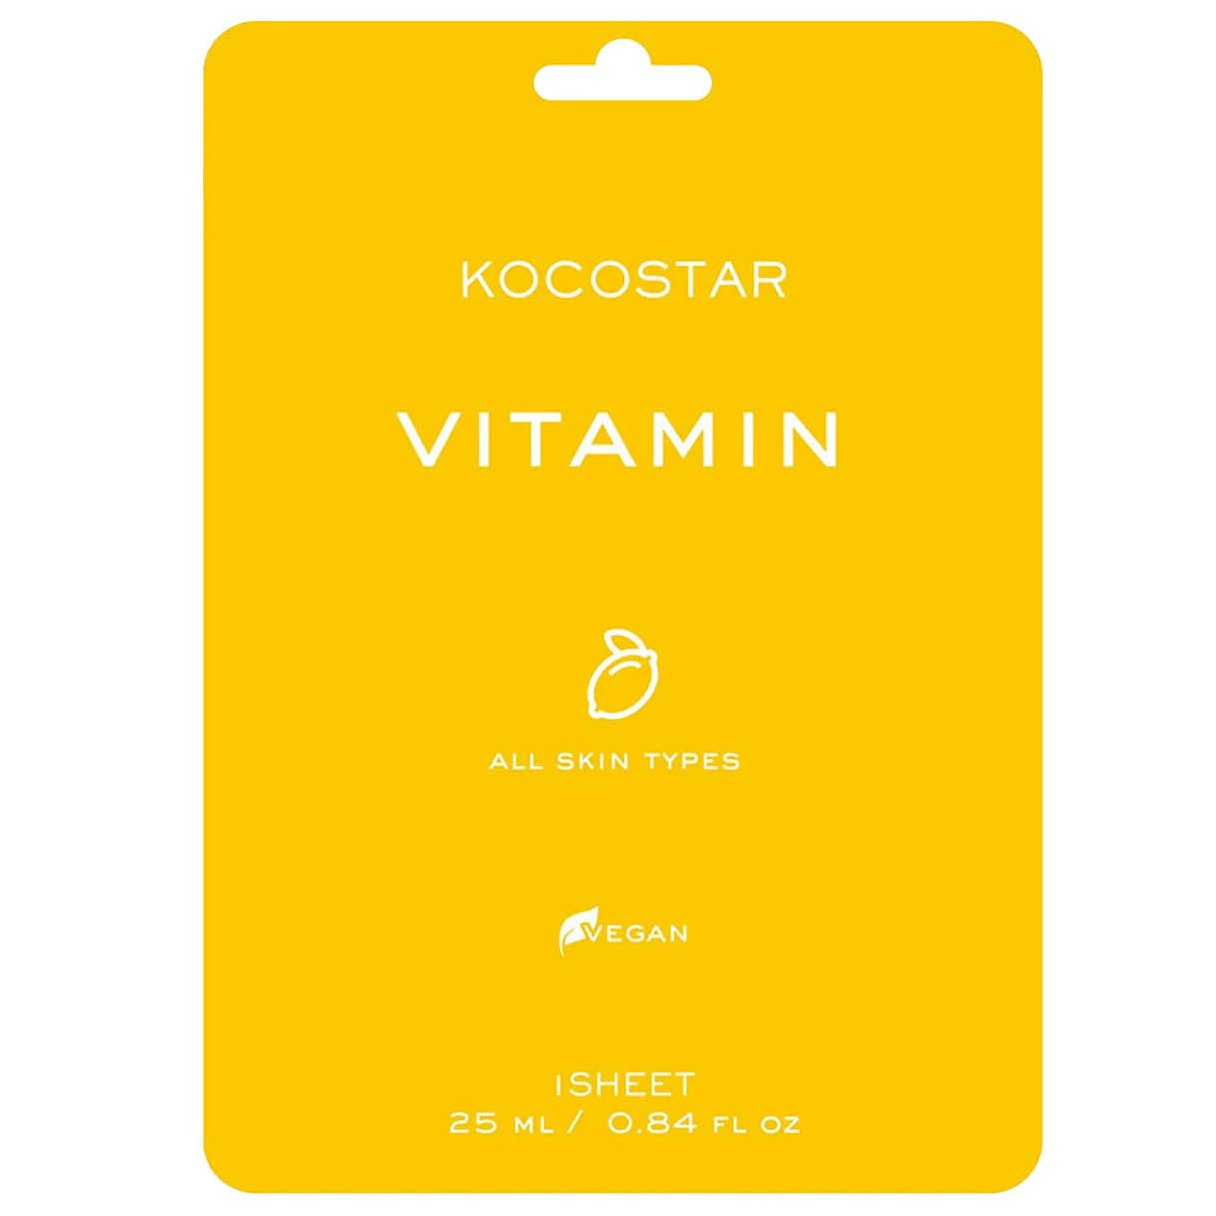 Vican Kocostar Vitamin Face Mask Κωδ 5603 Εμποτισμένη Μάσκα Αναζωογόνησης & Λάμψης για Όλους τους Τύπους Δέρματος 1 Τεμάχιο